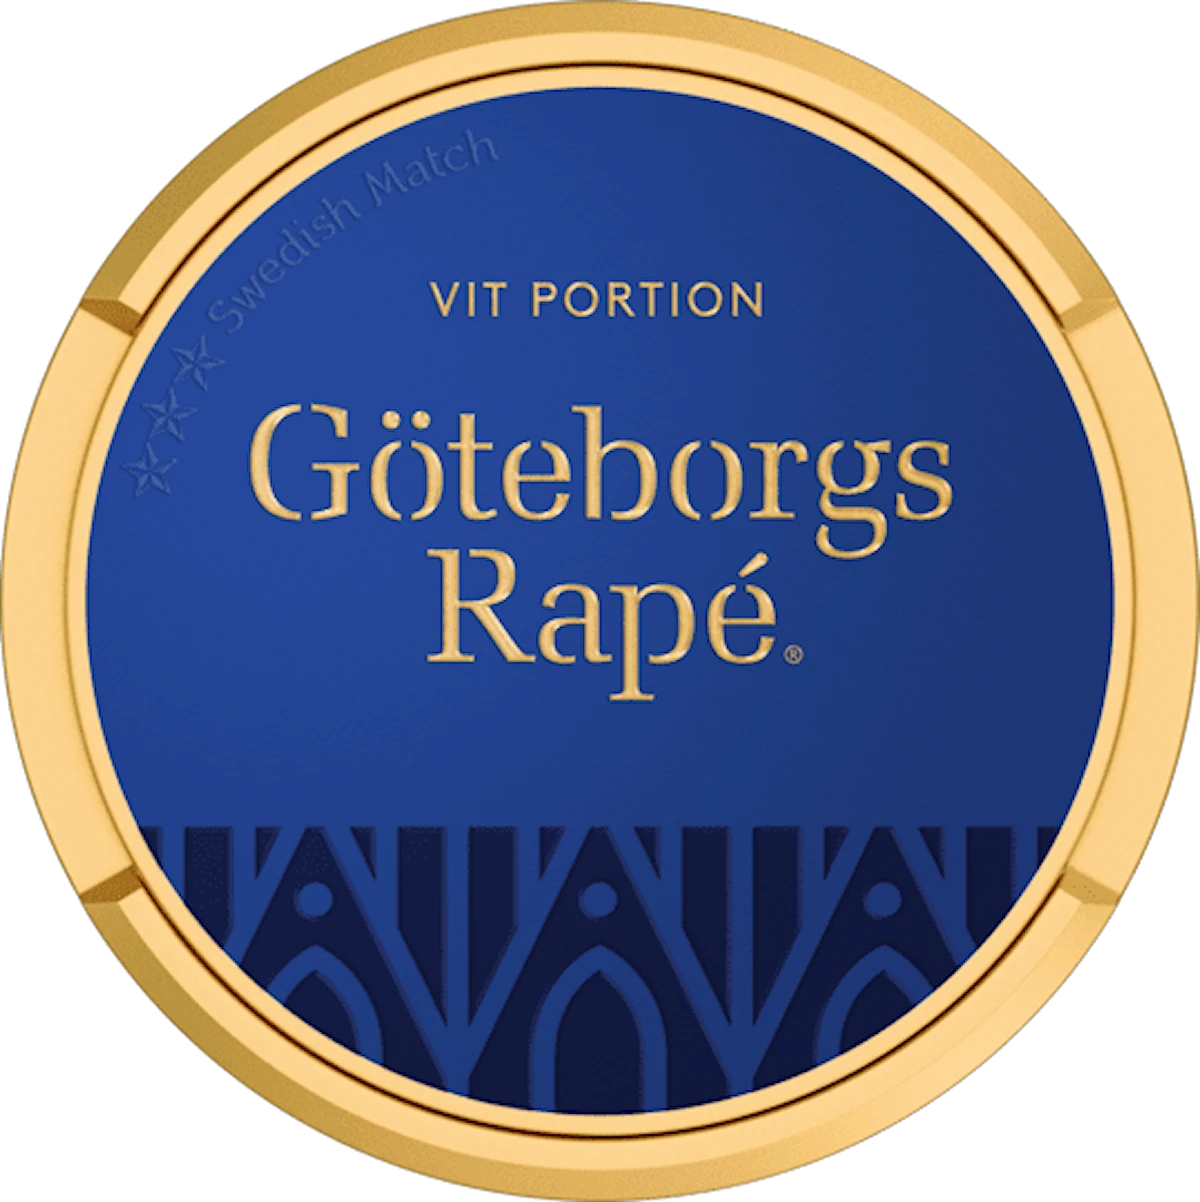 Göteborgs Rapé White Portion